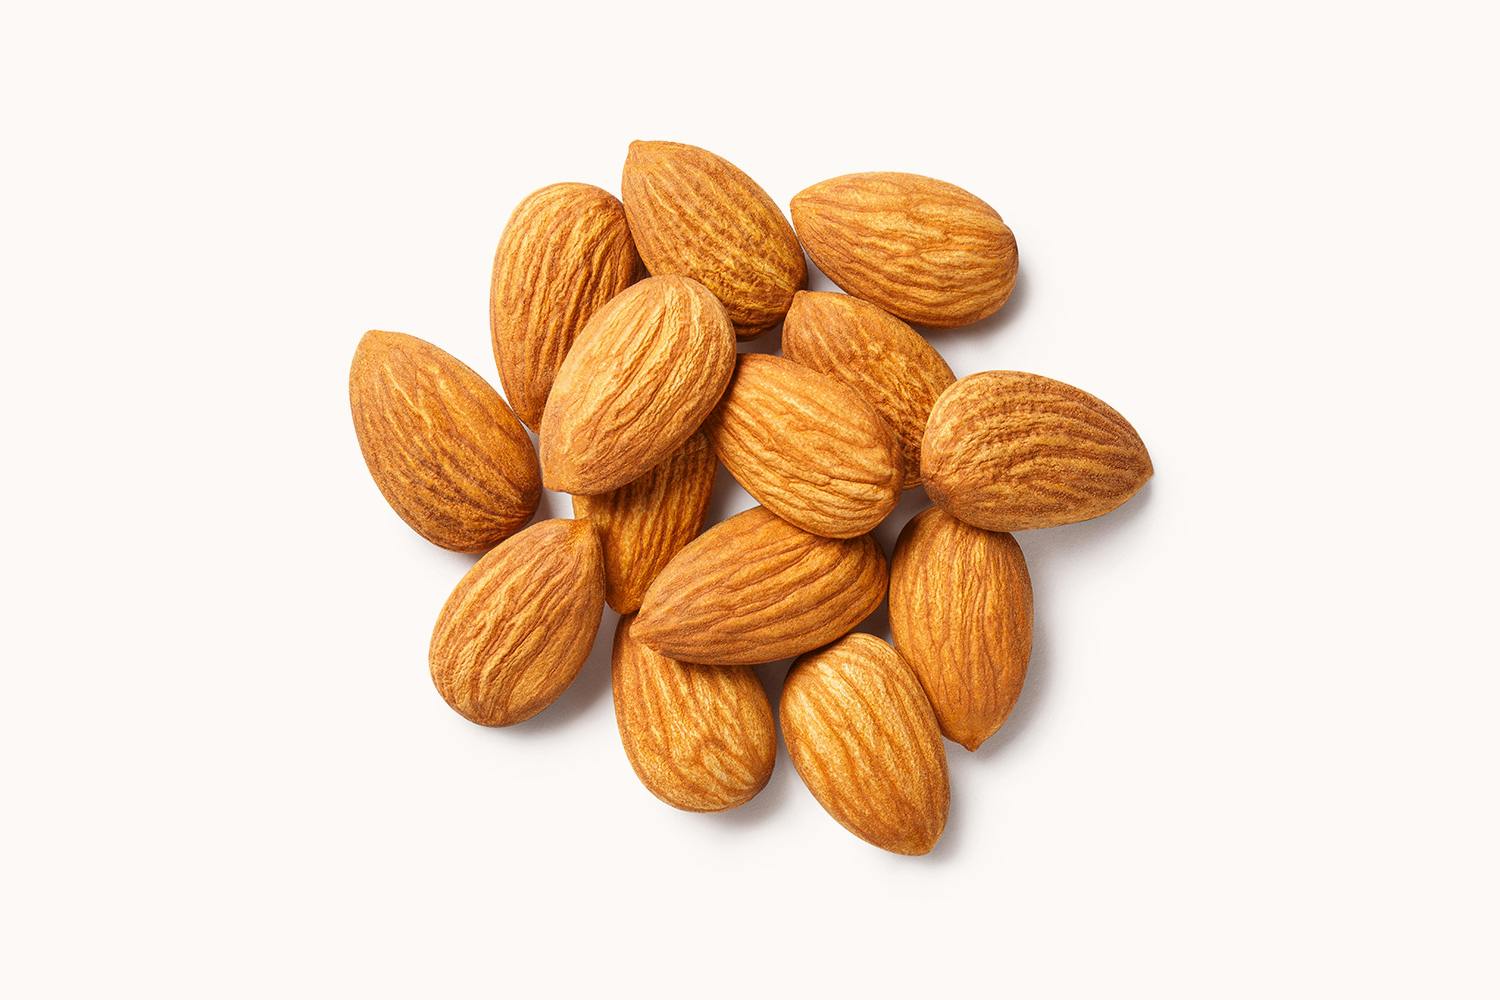 American Almonds